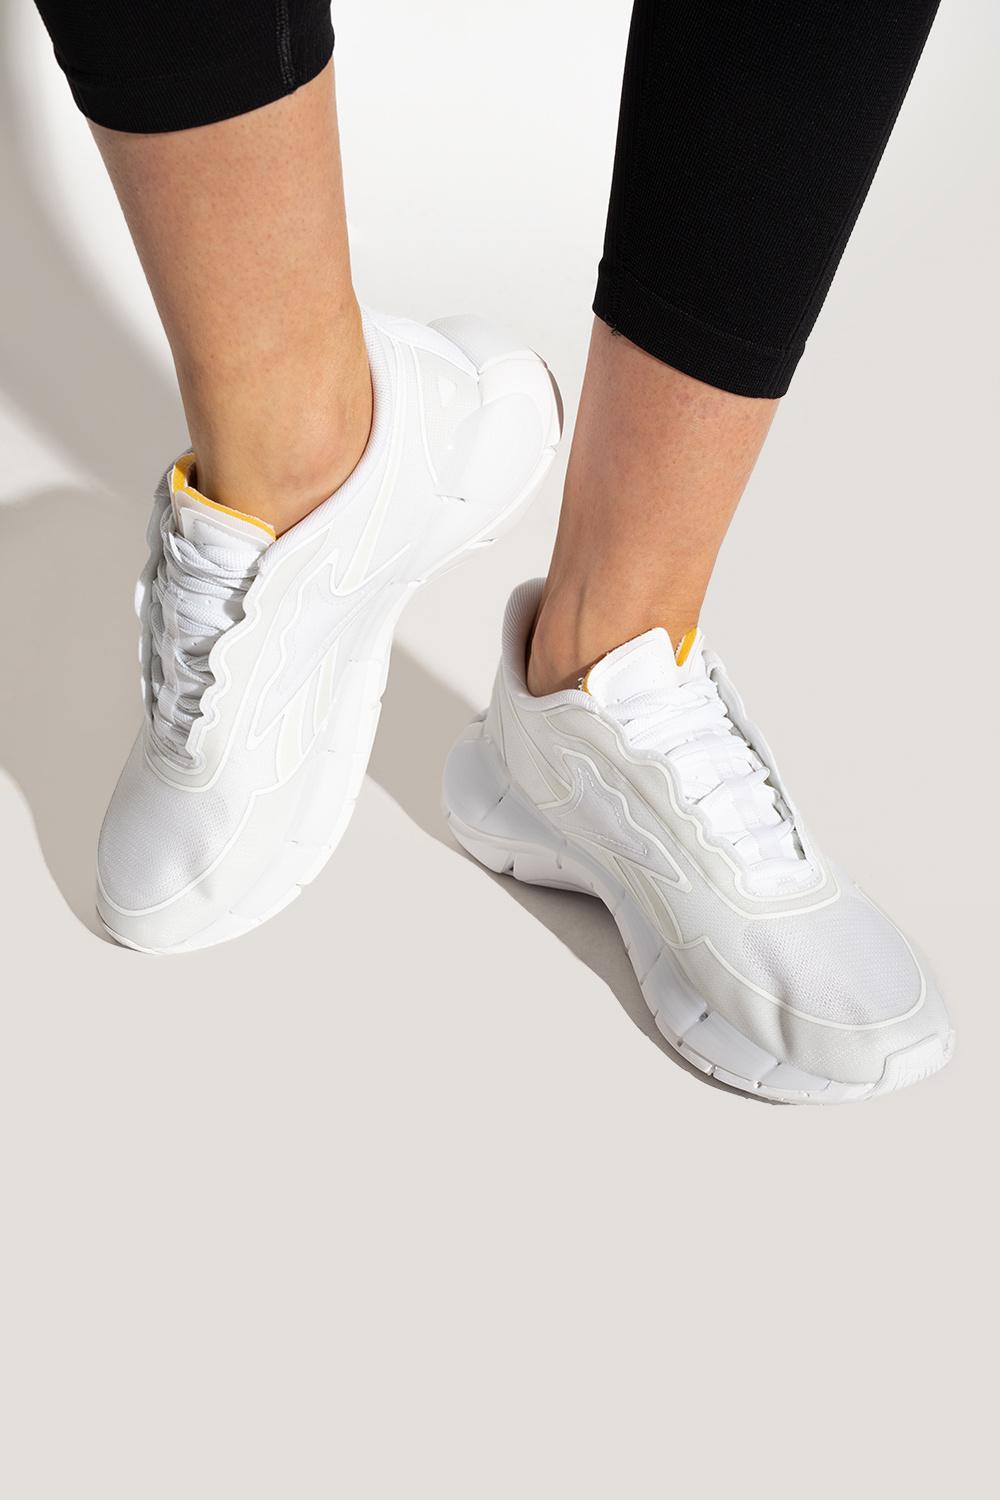 Reebok X Victoria Beckham 'zig Kinetica' Sneakers in White | Lyst